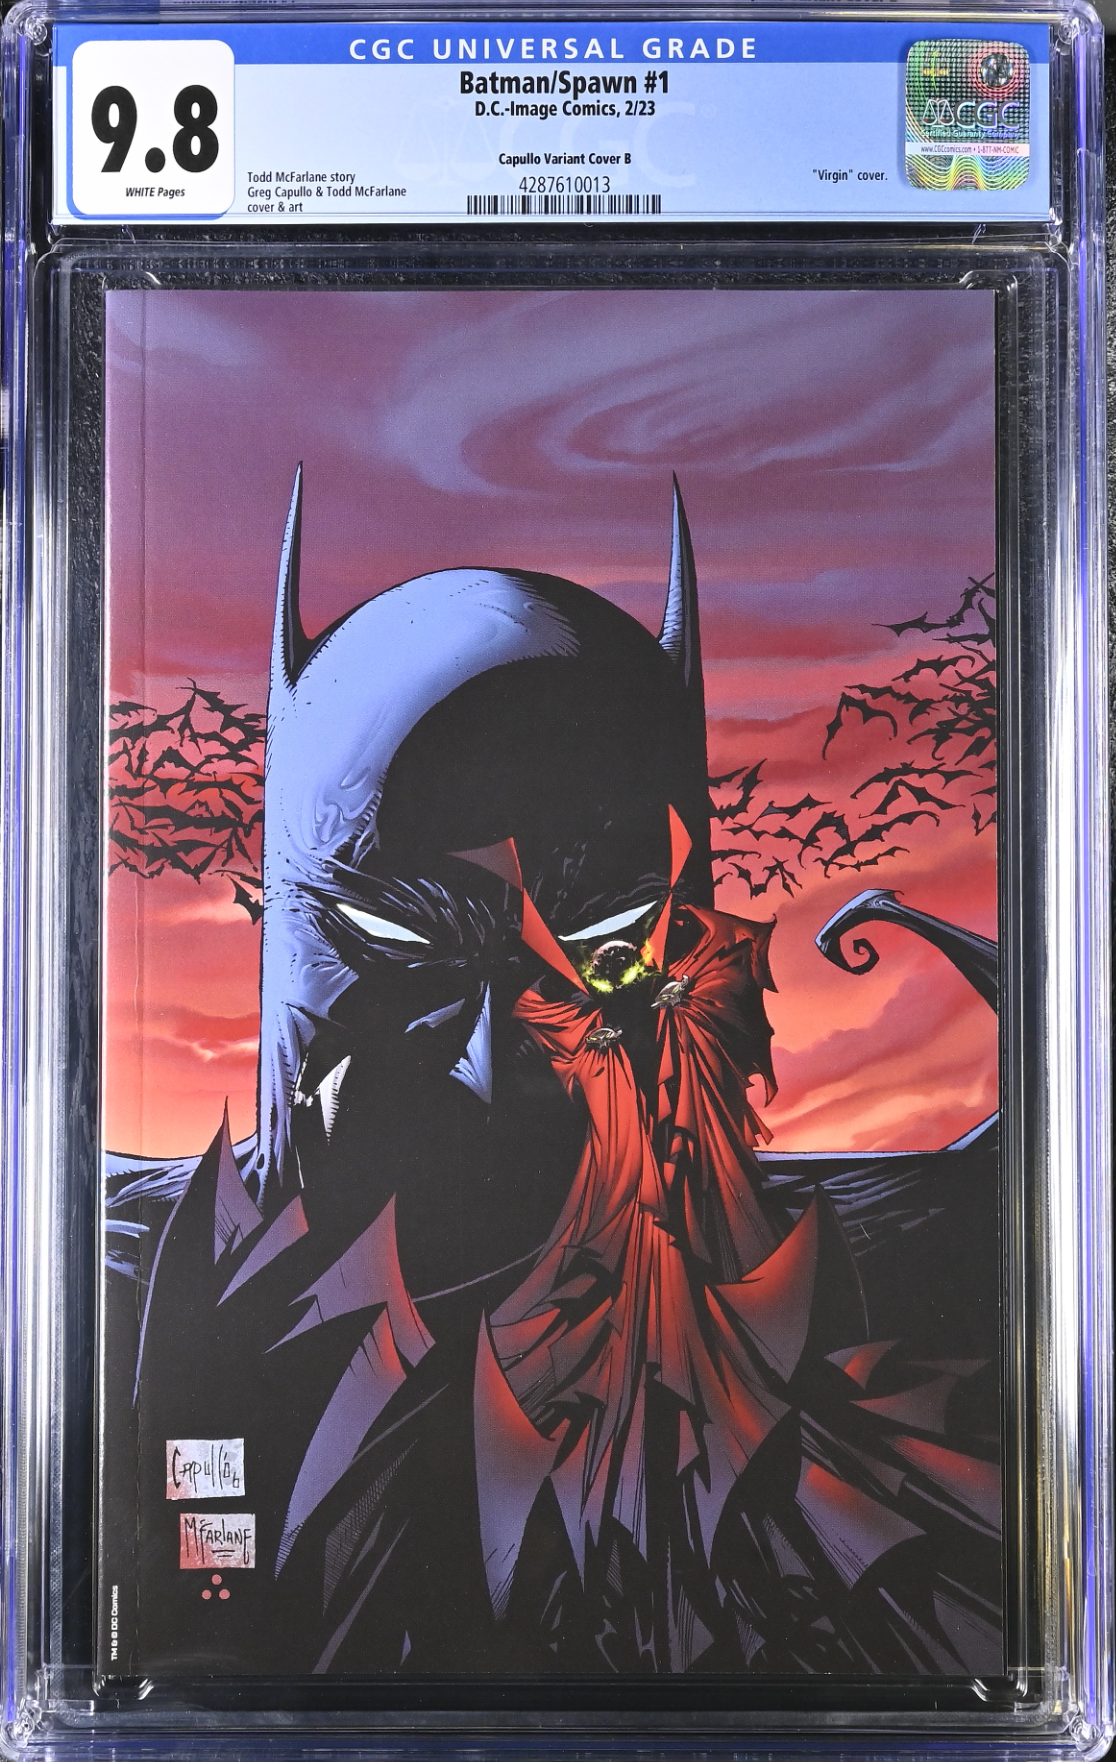 Batman Spawn #1 Cover K - Capullo & McFarlane "Team" Variant CGC 9.8